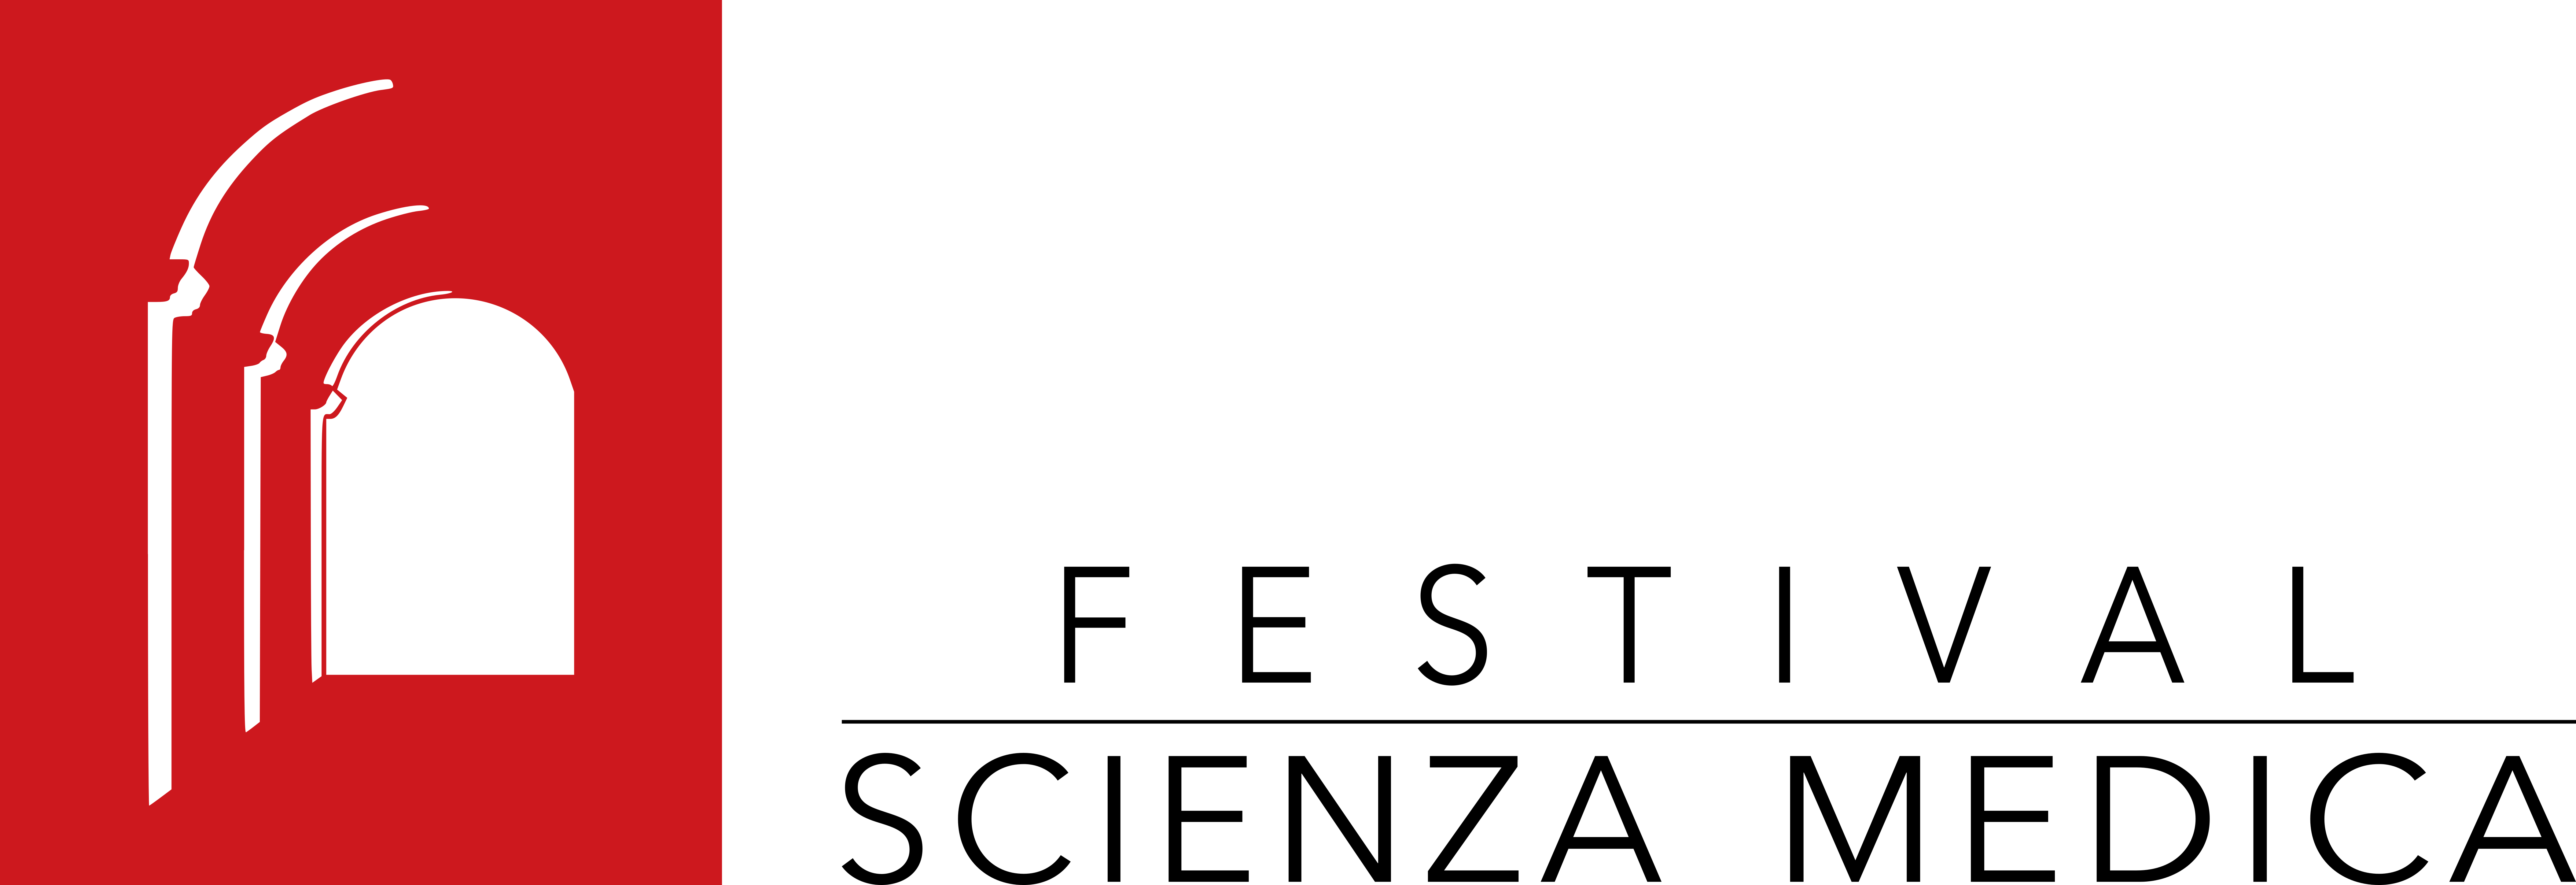 FestivalScienzaMedica_logo